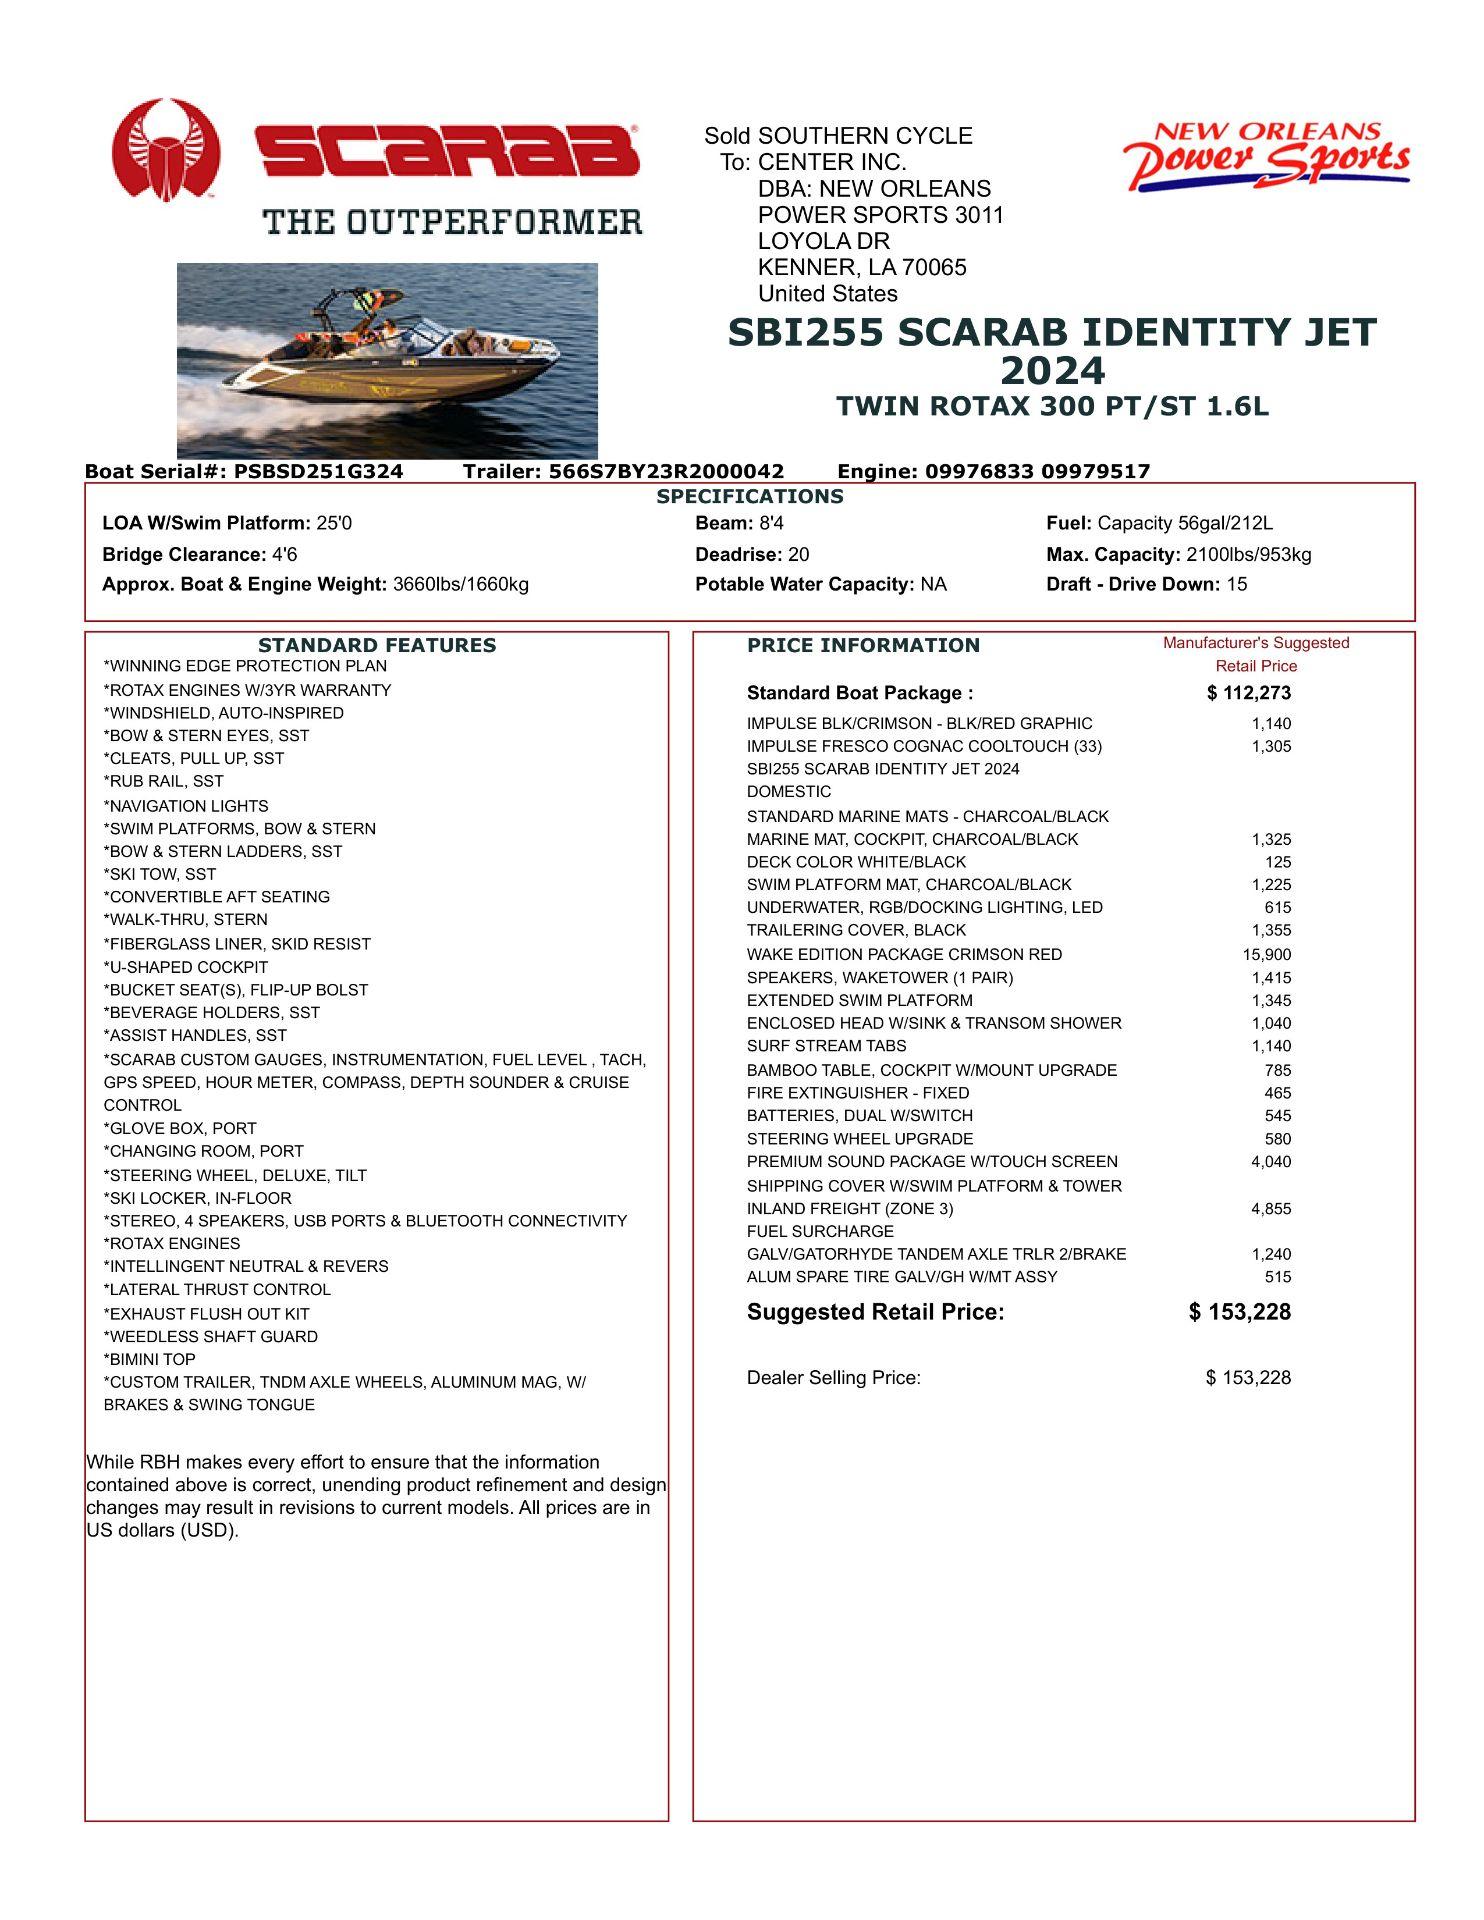 2024 Scarab SBI255 IDENTITY